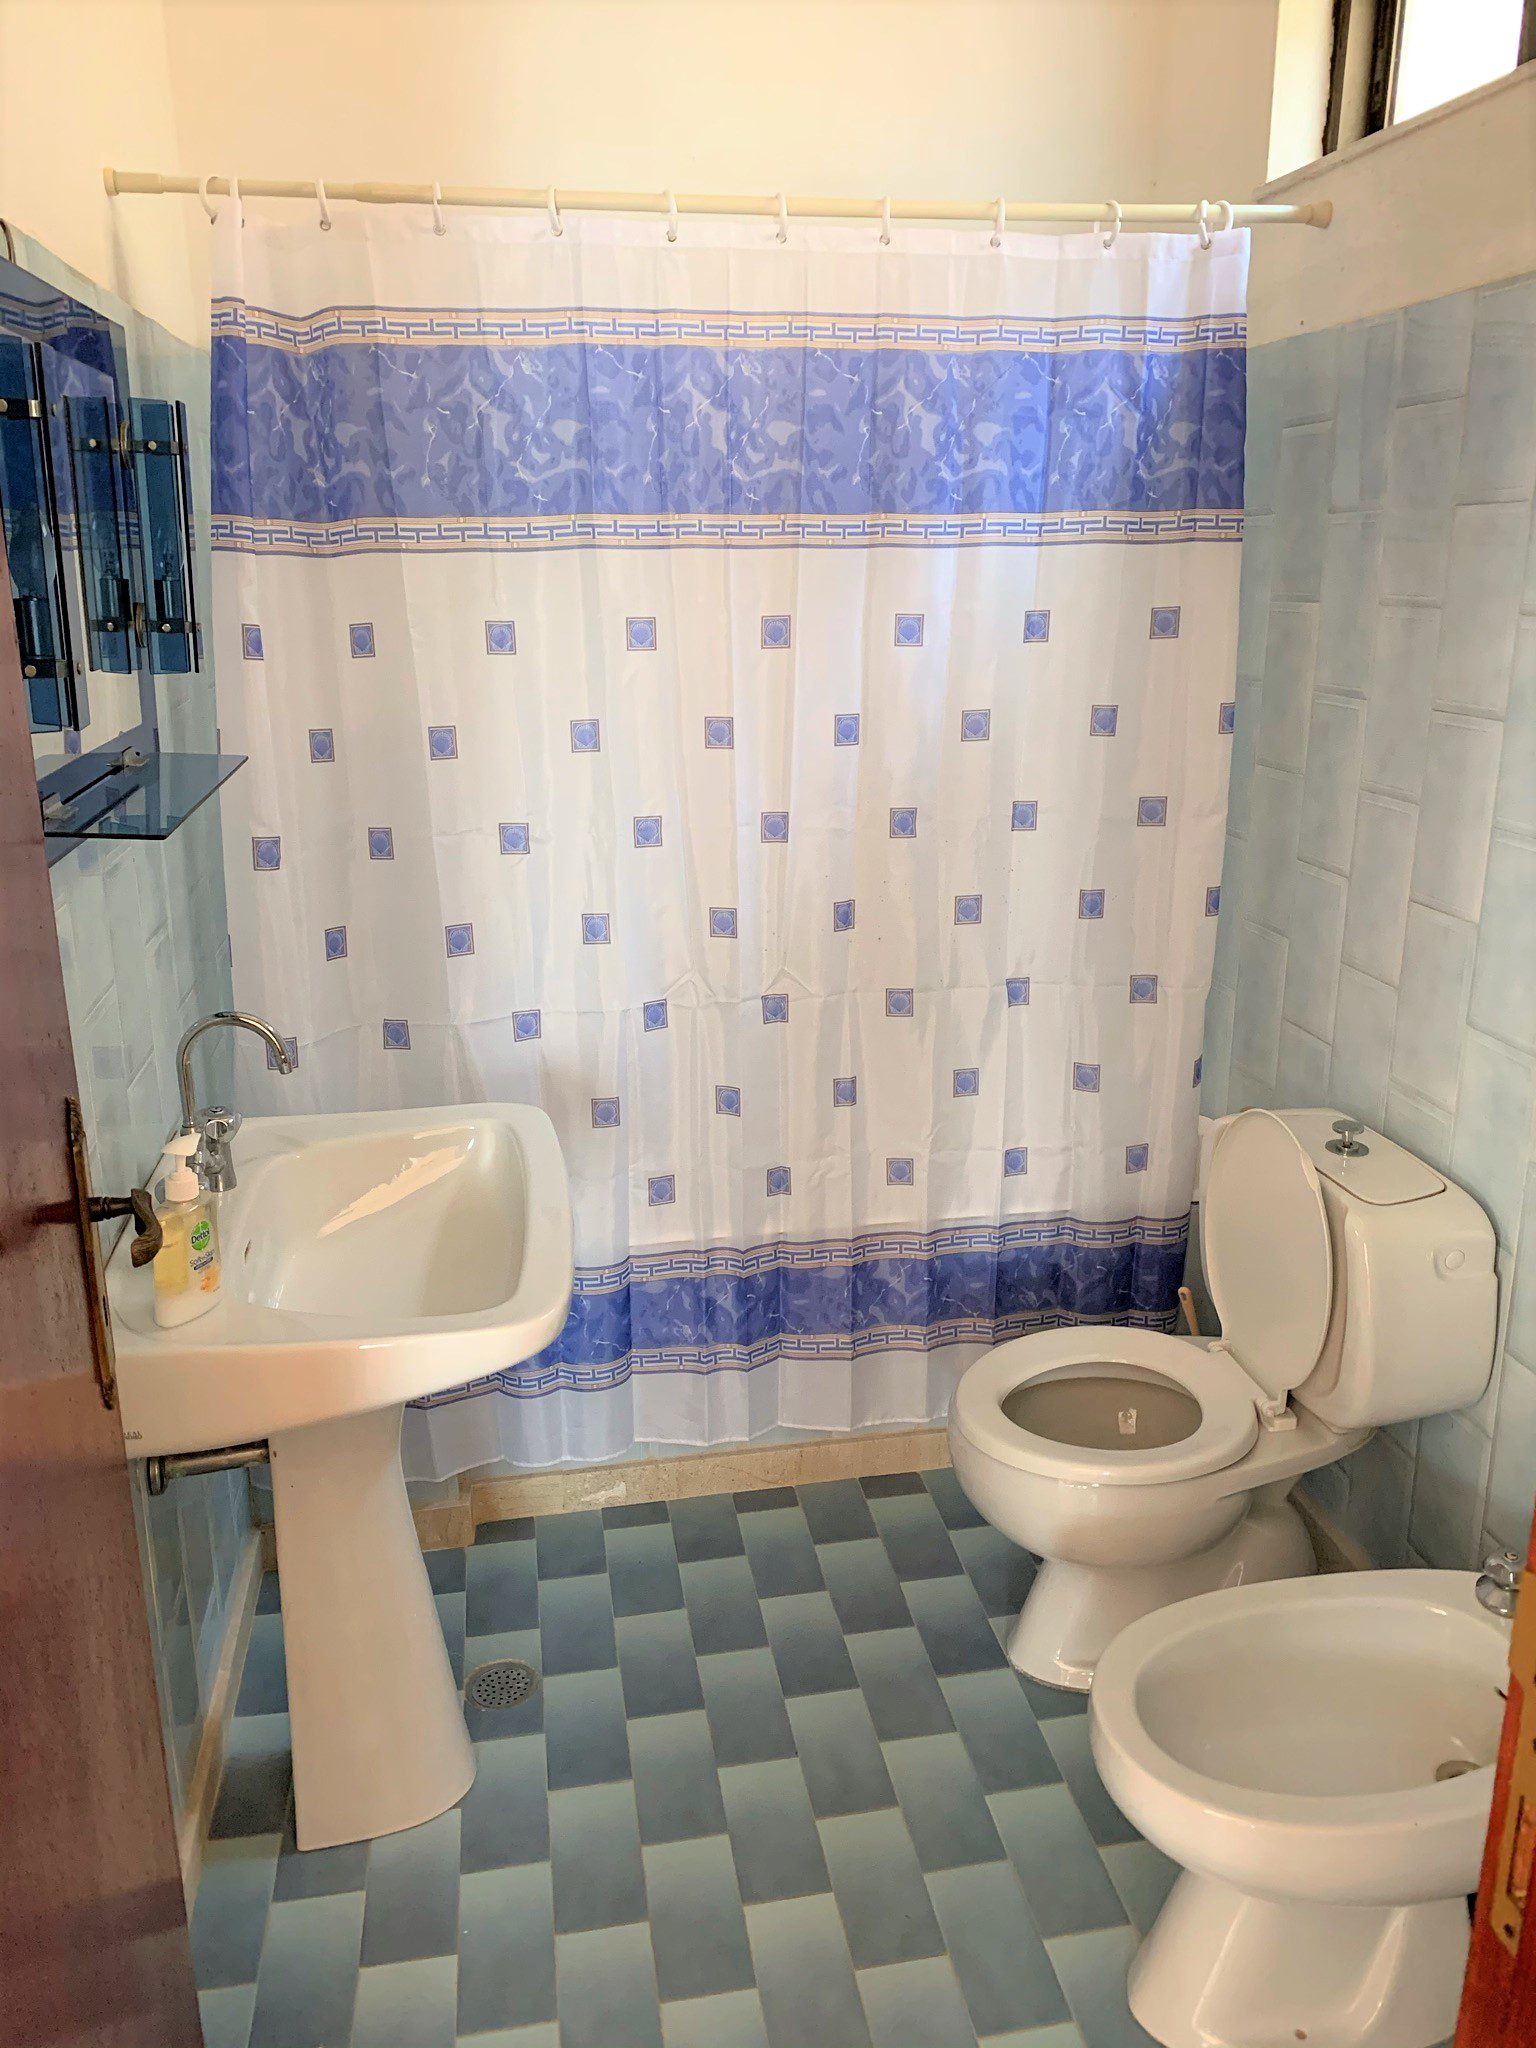 Bathroom of house for sale in Ithaca Greece, Vathi/Dexa